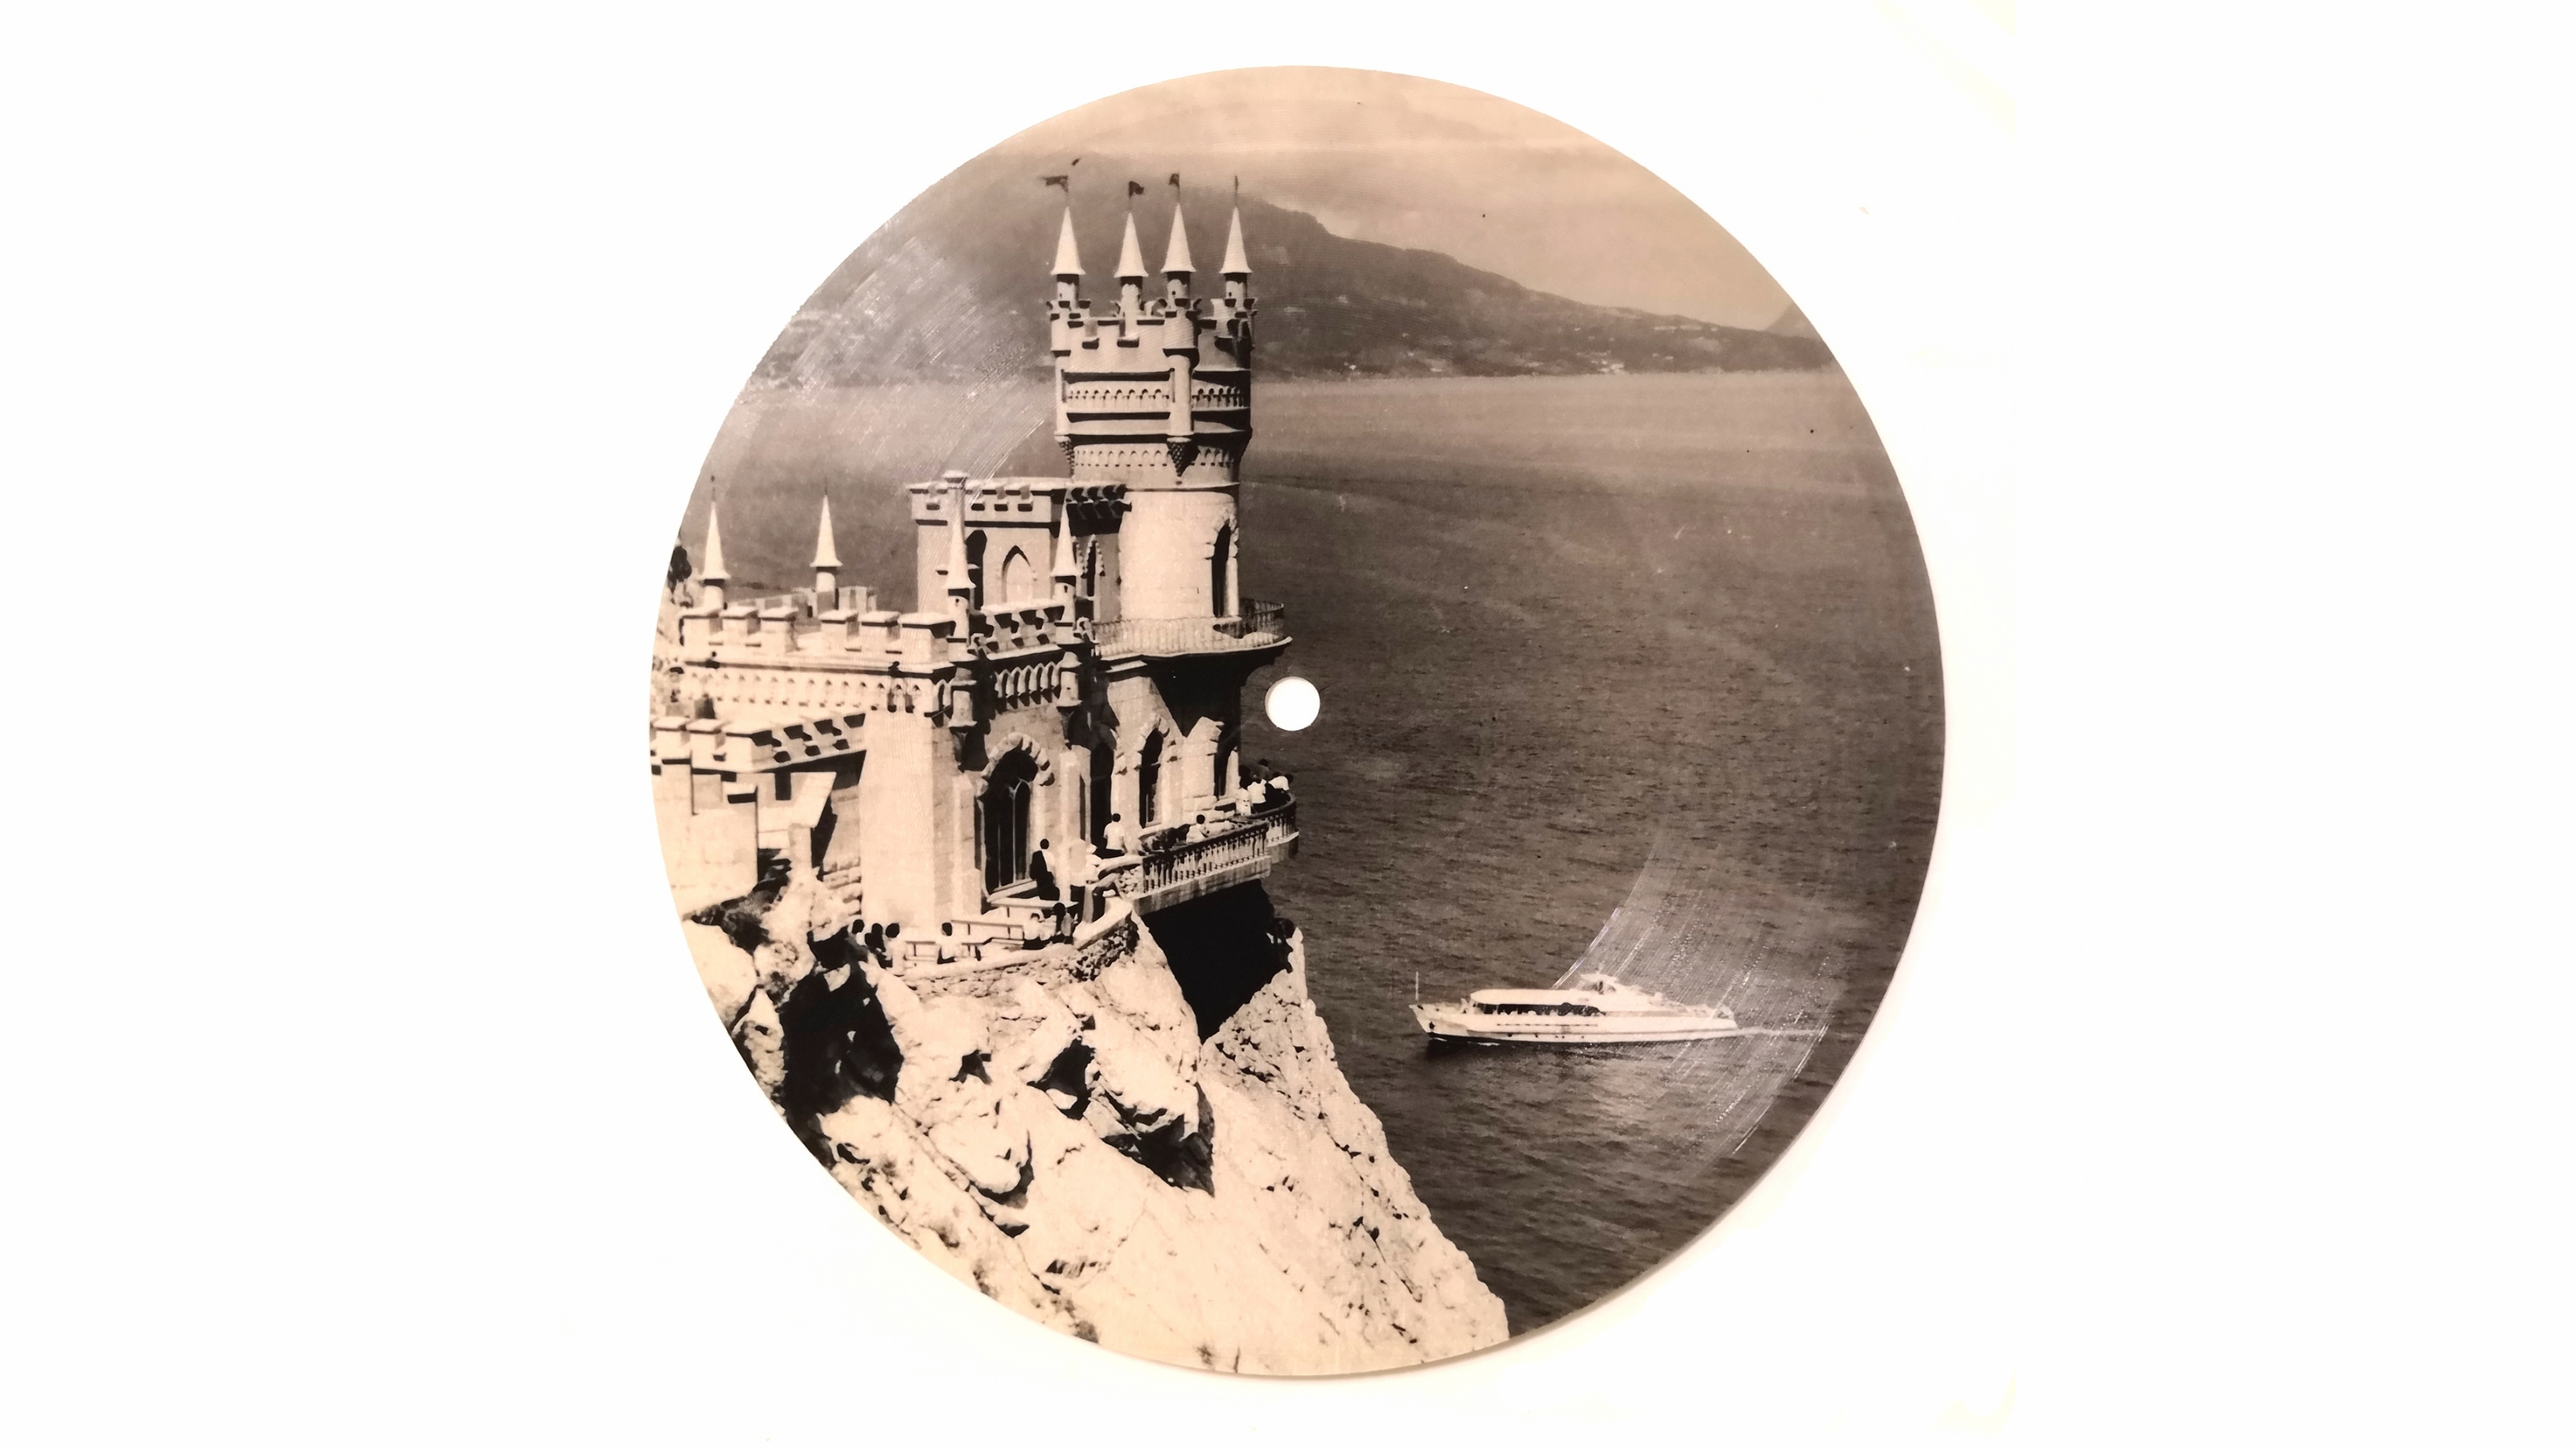 ★Алла Пугачёва★
«Арлекино» 
Souvenir record
On flexi disk